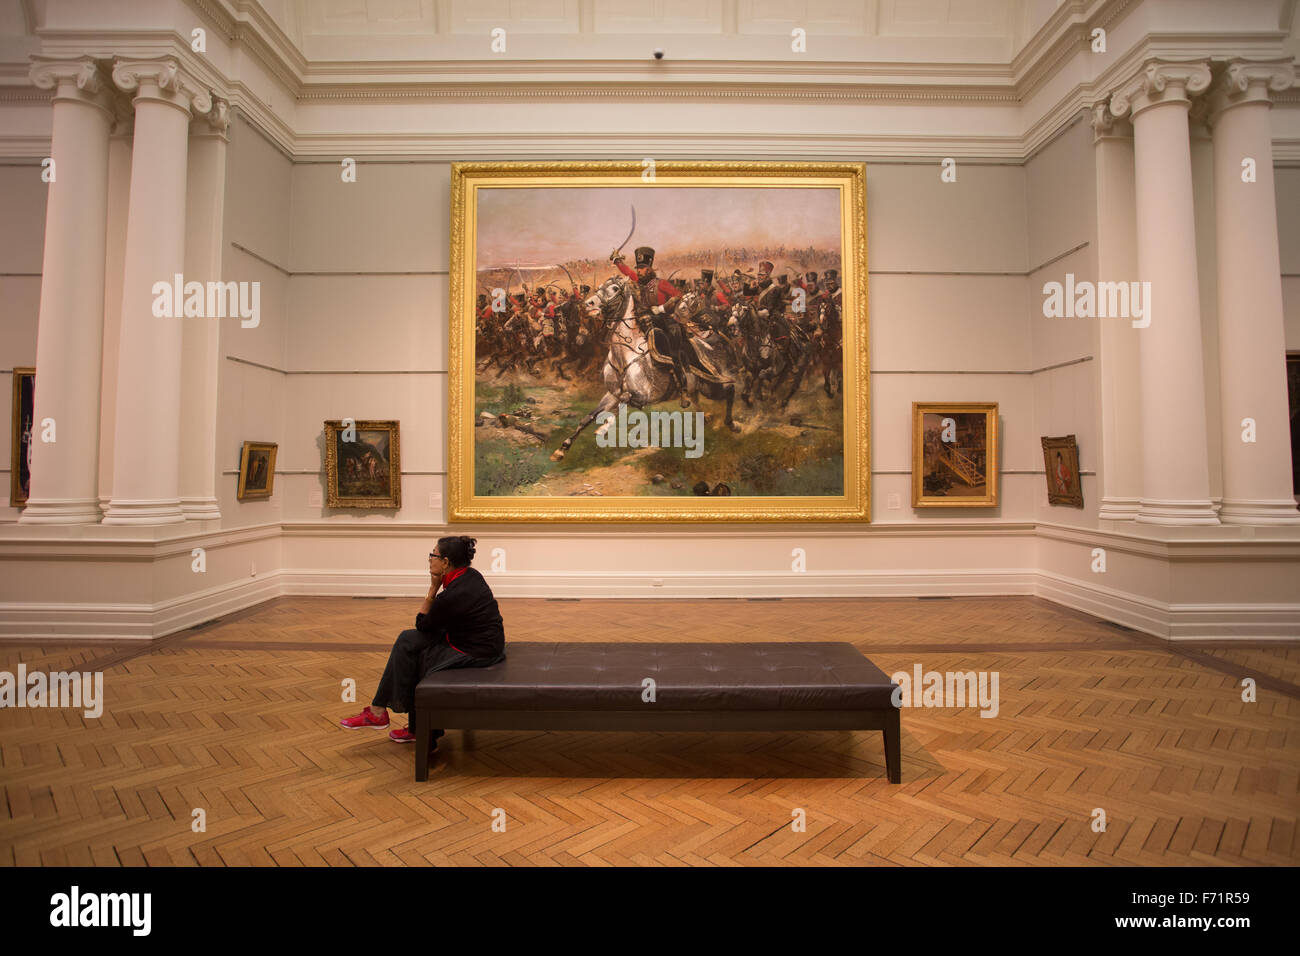 Cansada mujer sentada bench dentro de galería de arte Foto de stock